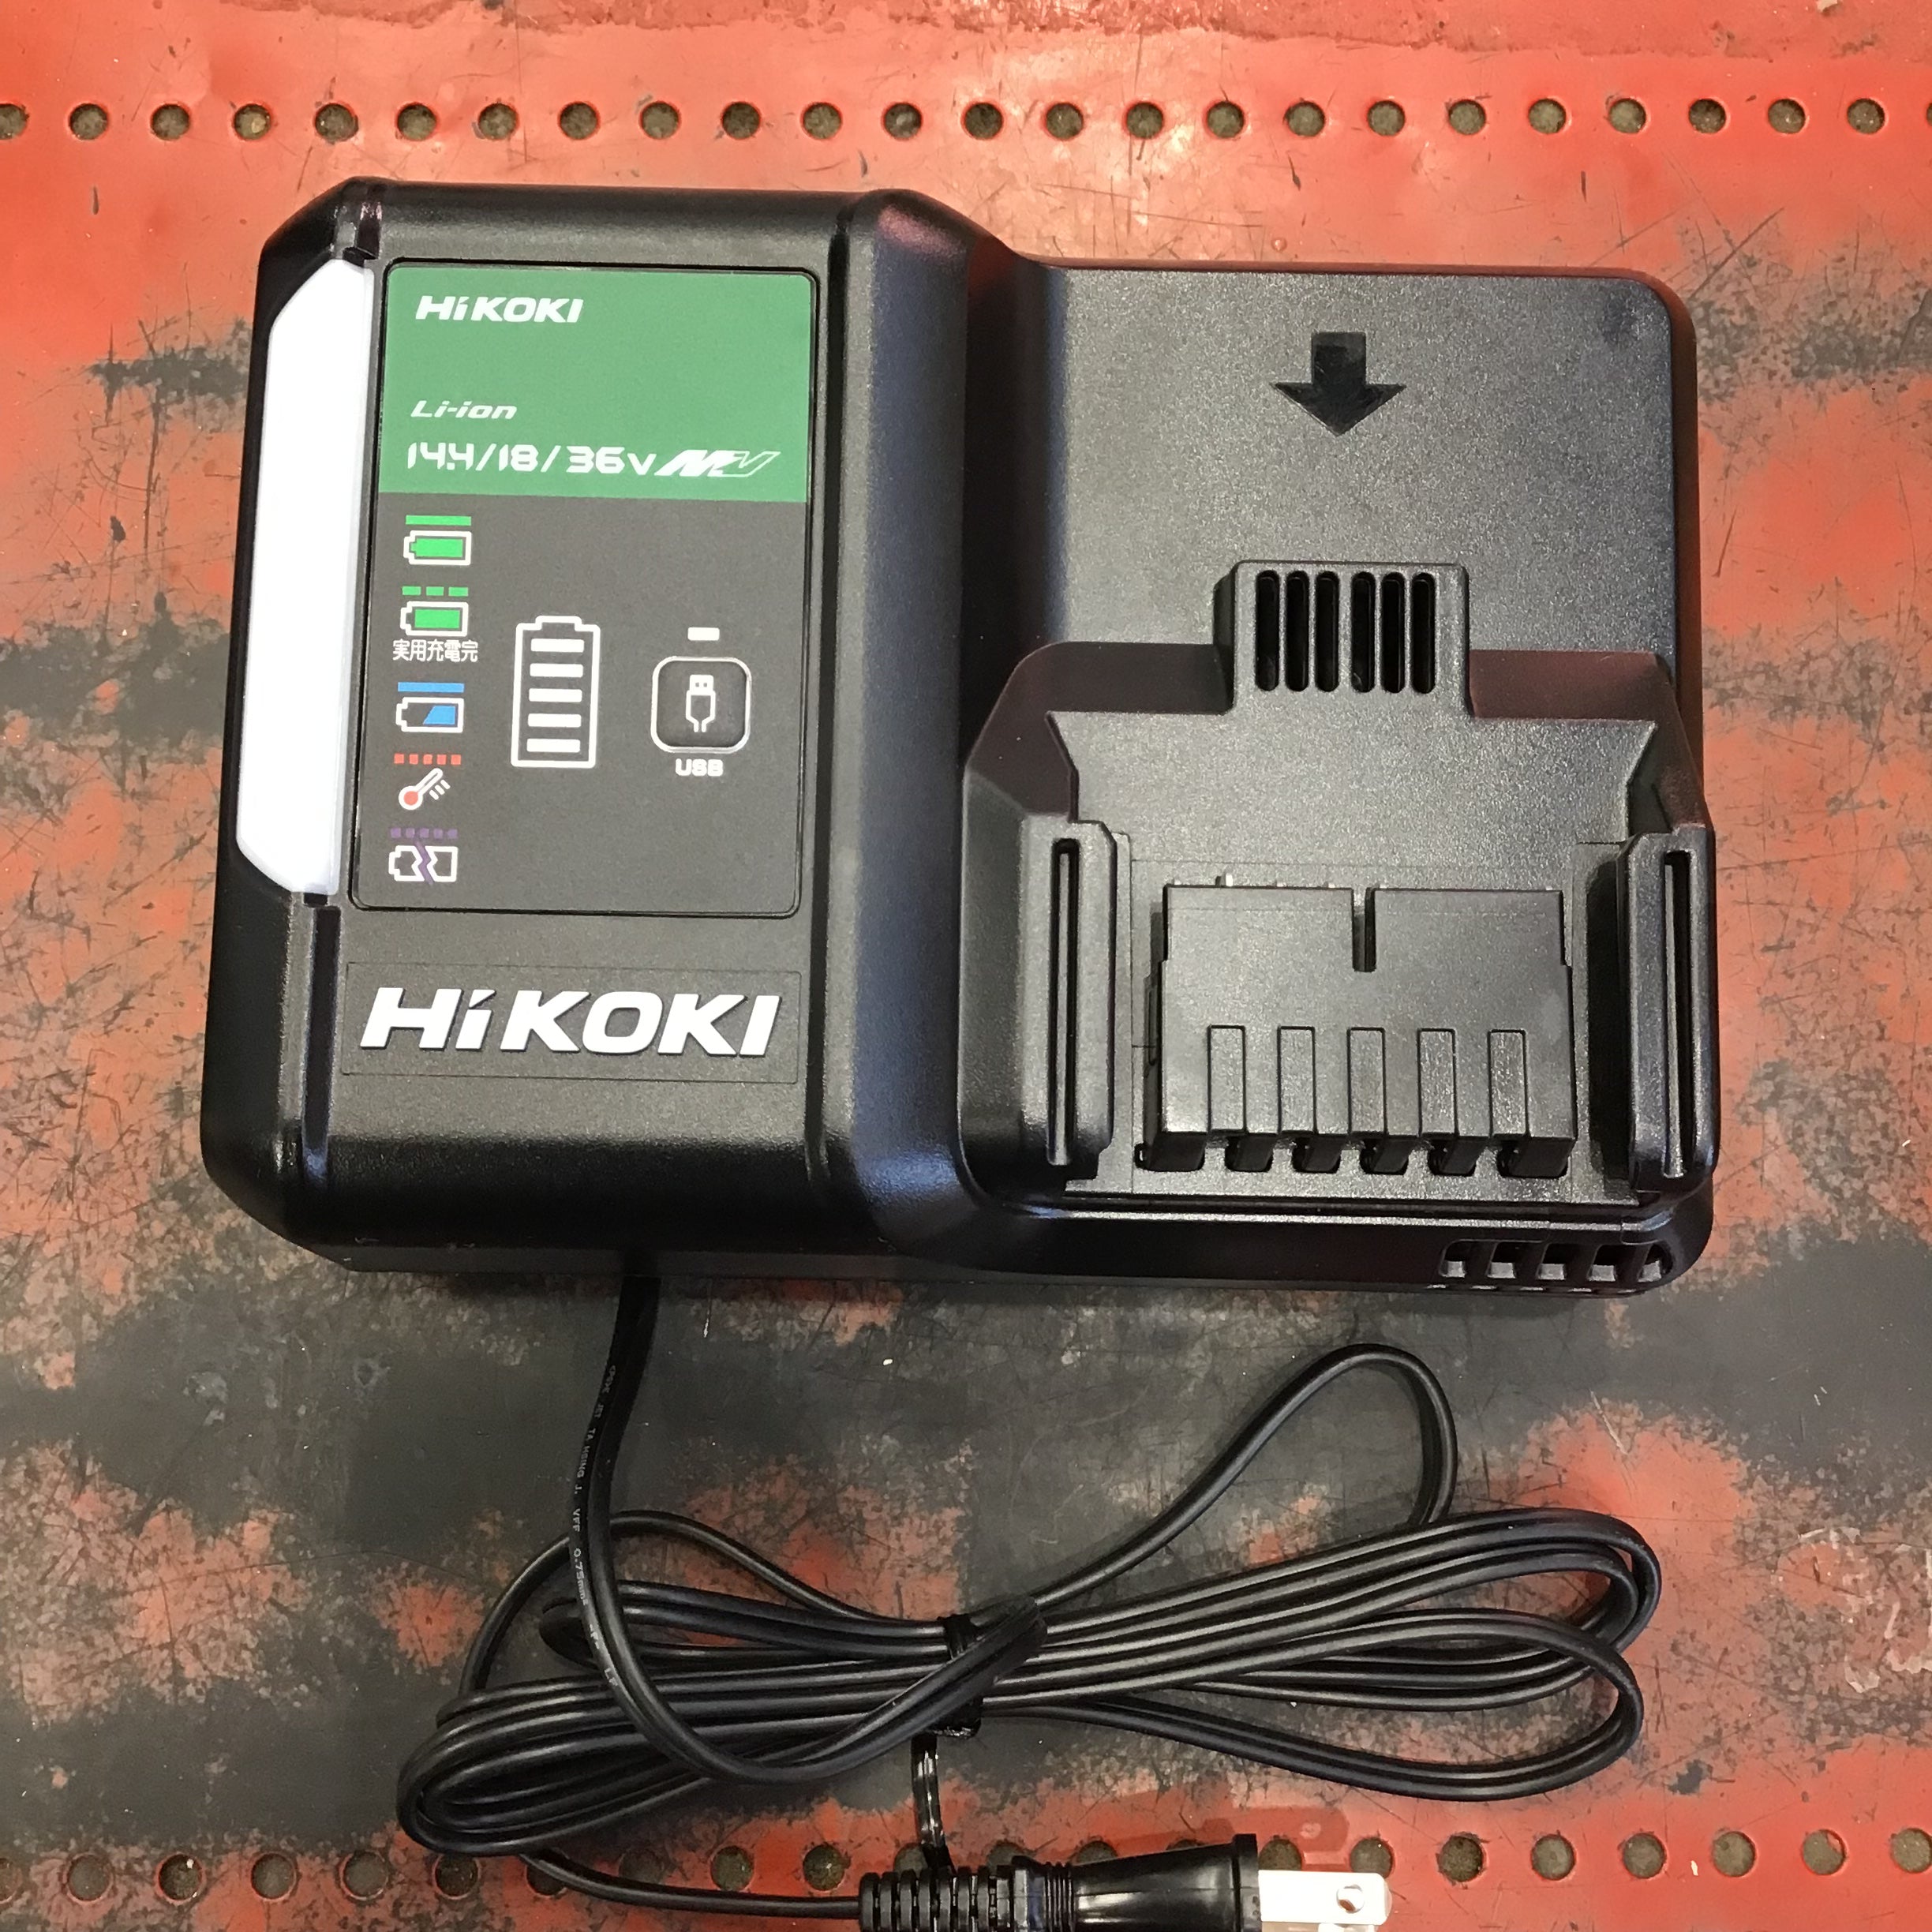 HiKOKI(ハイコーキ) 36V コードレスディスクグラインダ スライドスイッチ G3615DC(2WPZ) 砥石径150mm  G3615DC(2WPZ)【草加店】